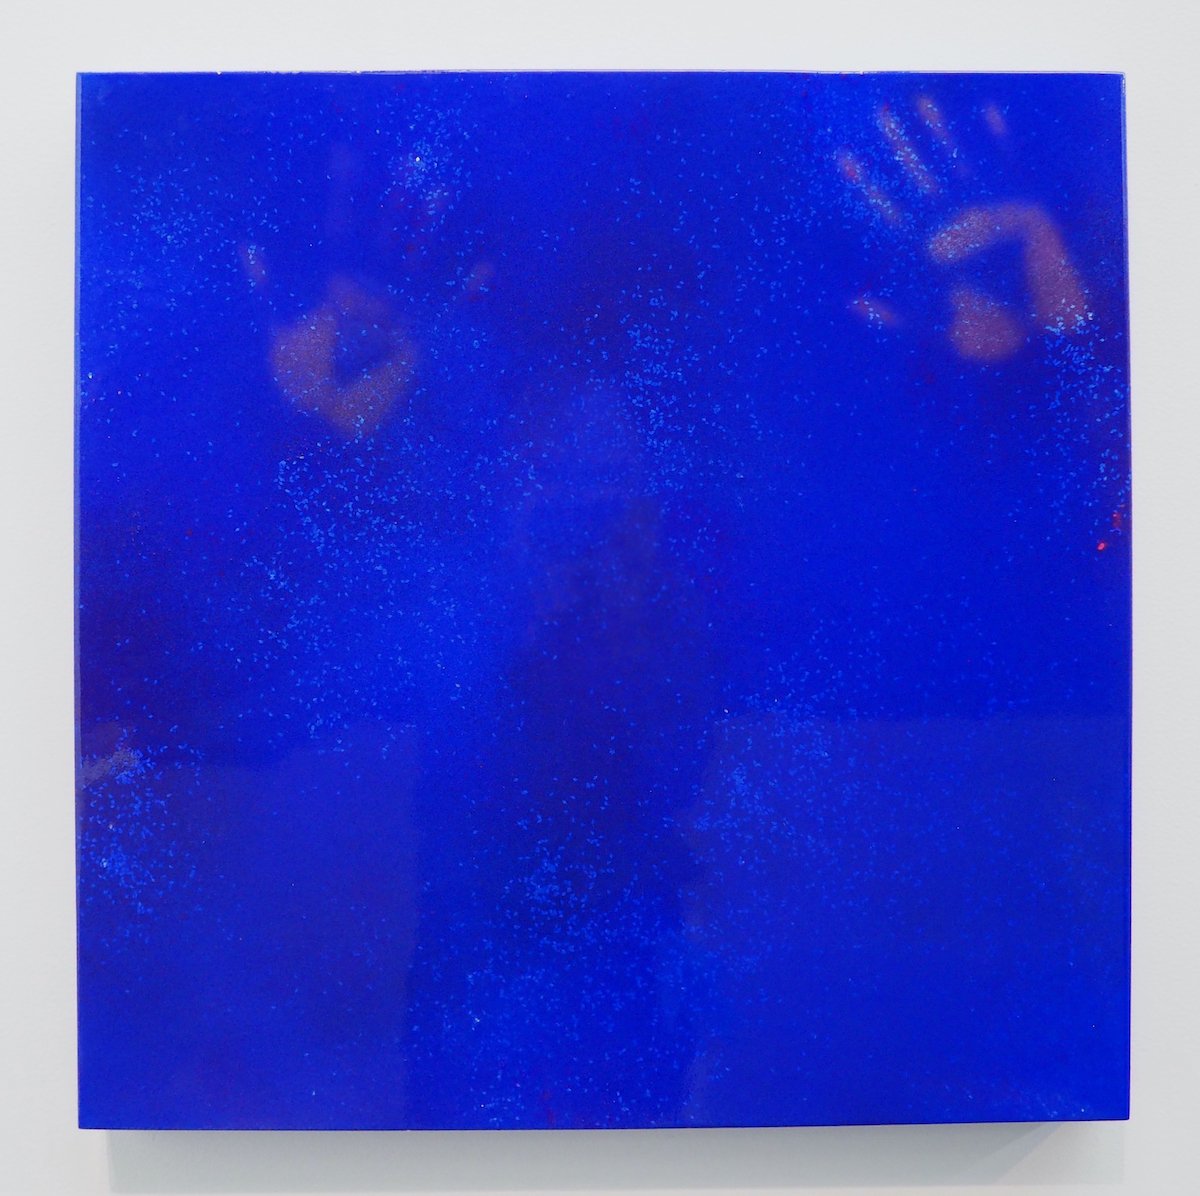  Rubén Ortiz Torres  Fingerprints , 2020 urethane, metallic flake, and thermochromatic pigment on wood panel  24 x 24 in&nbsp; (61 x 61 cm) 